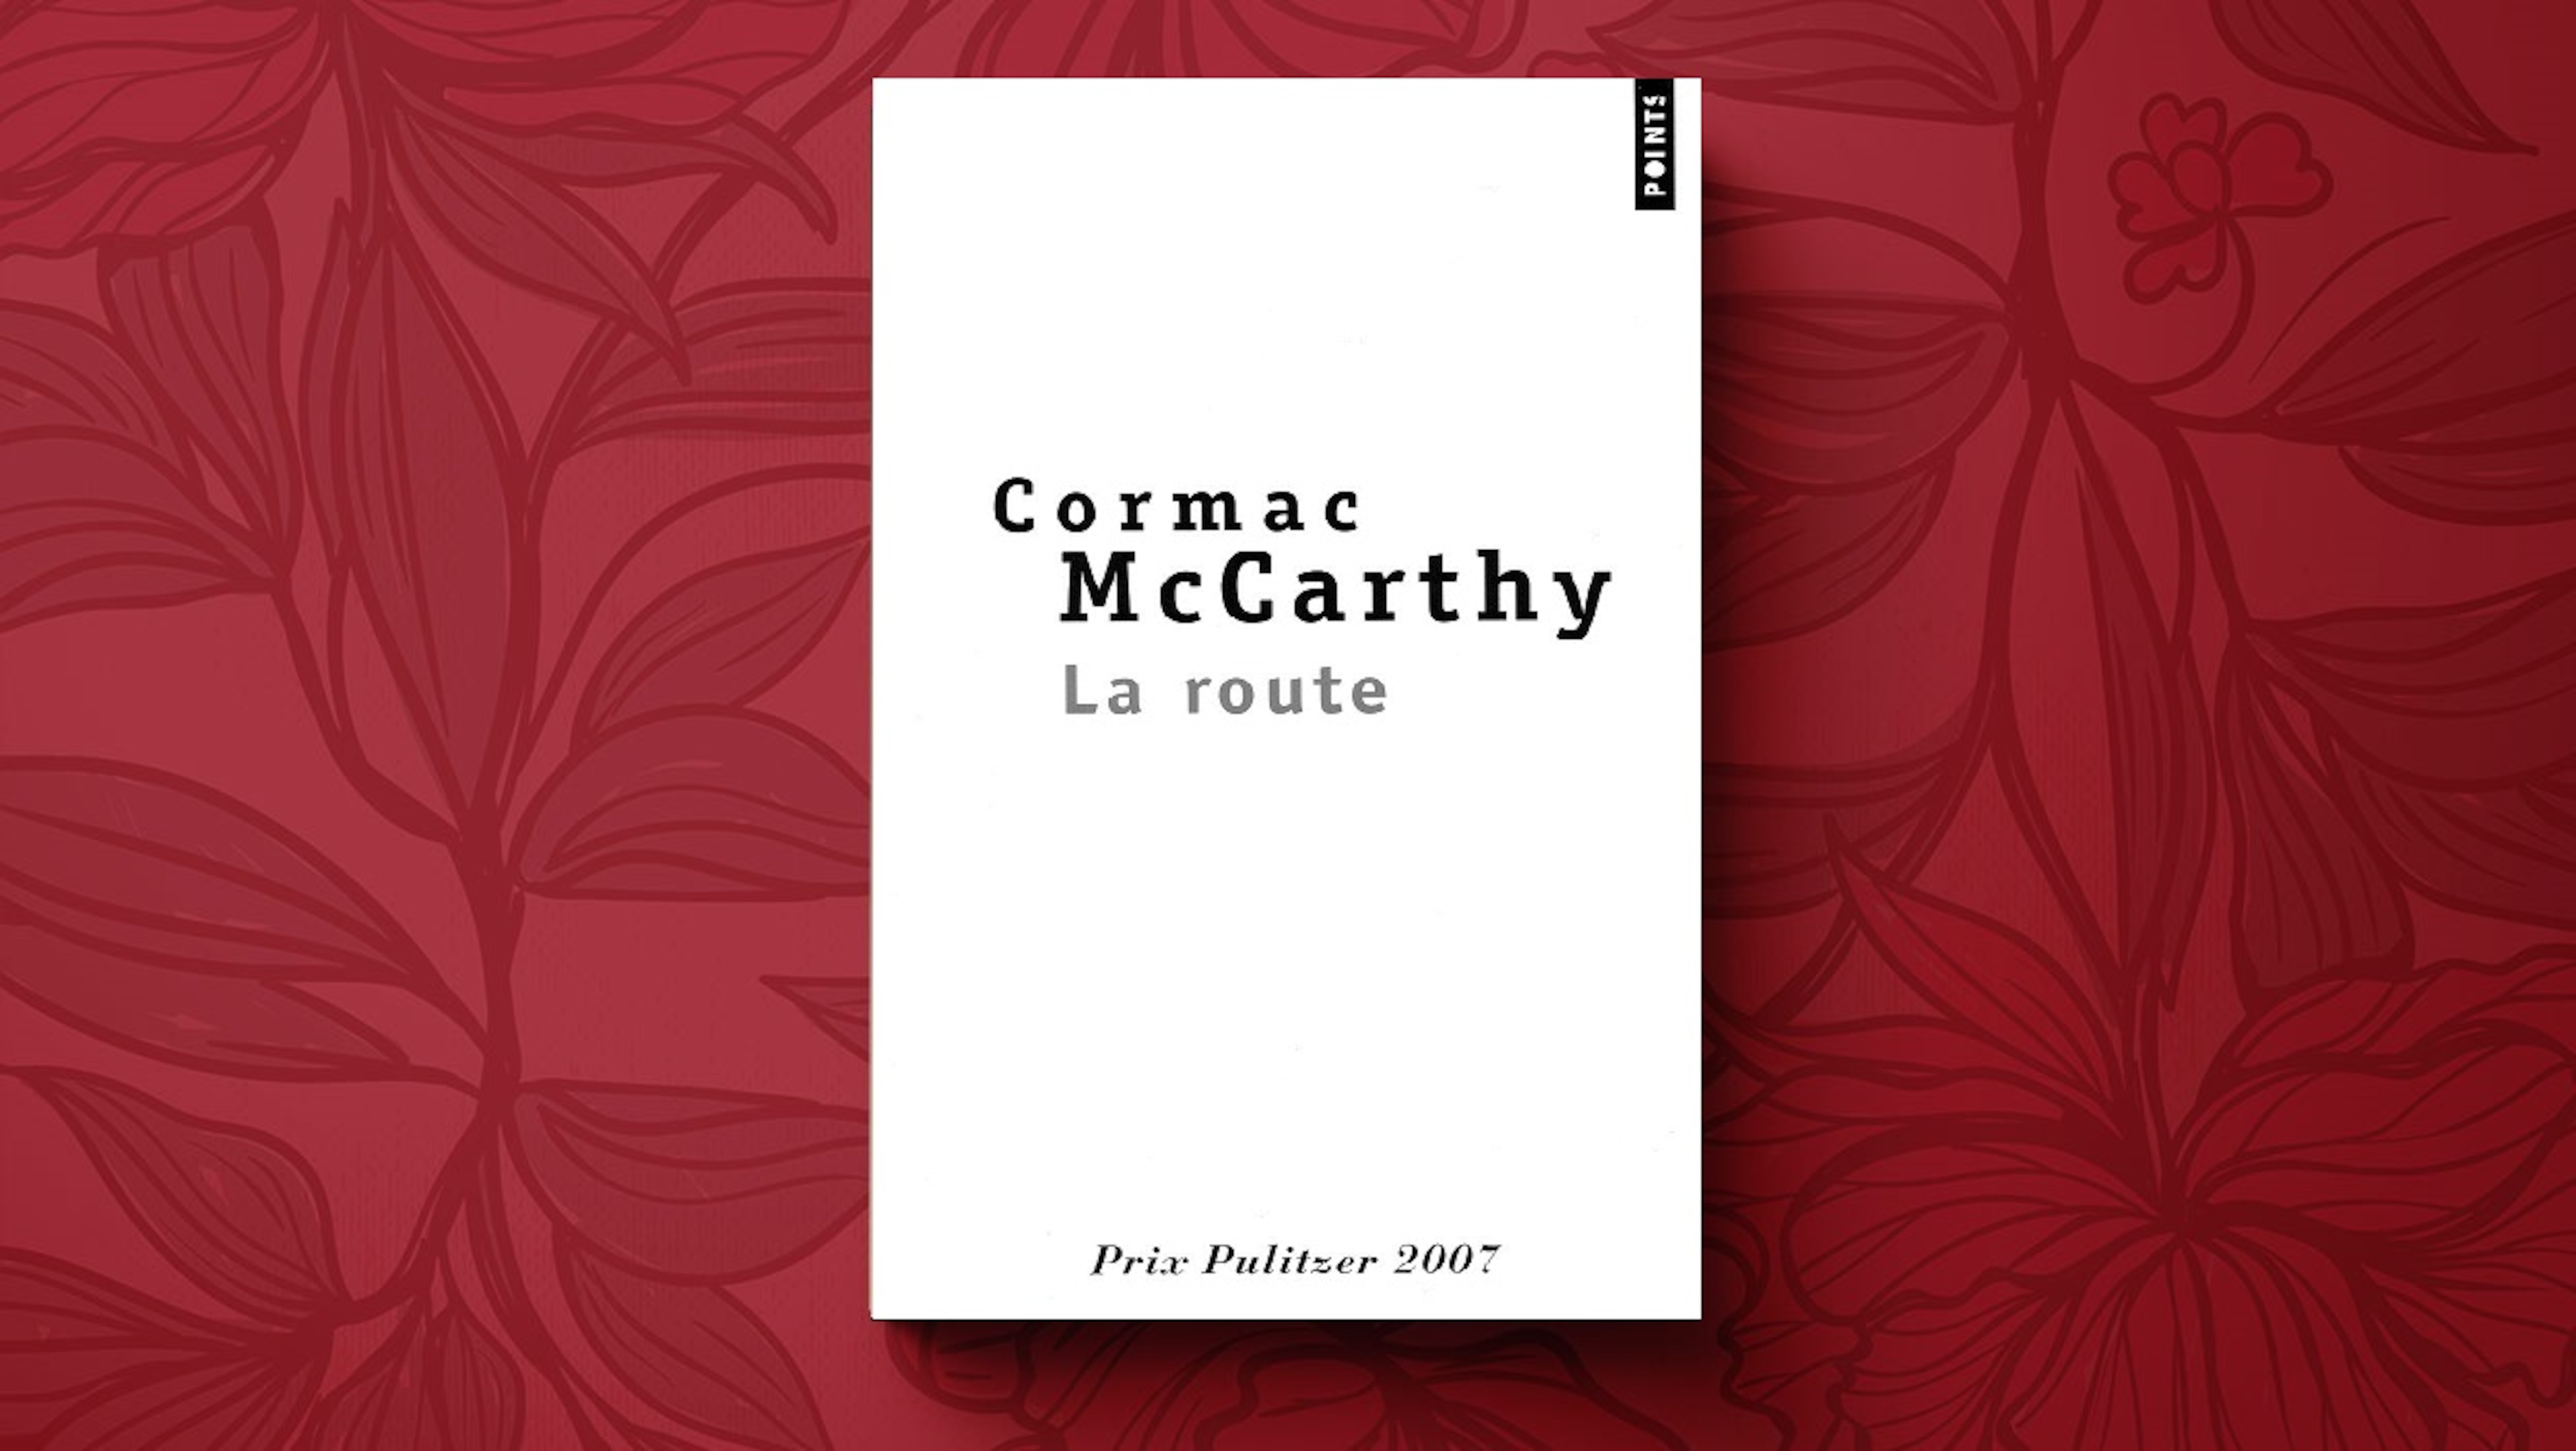 « La route », de Cormac McCarthy